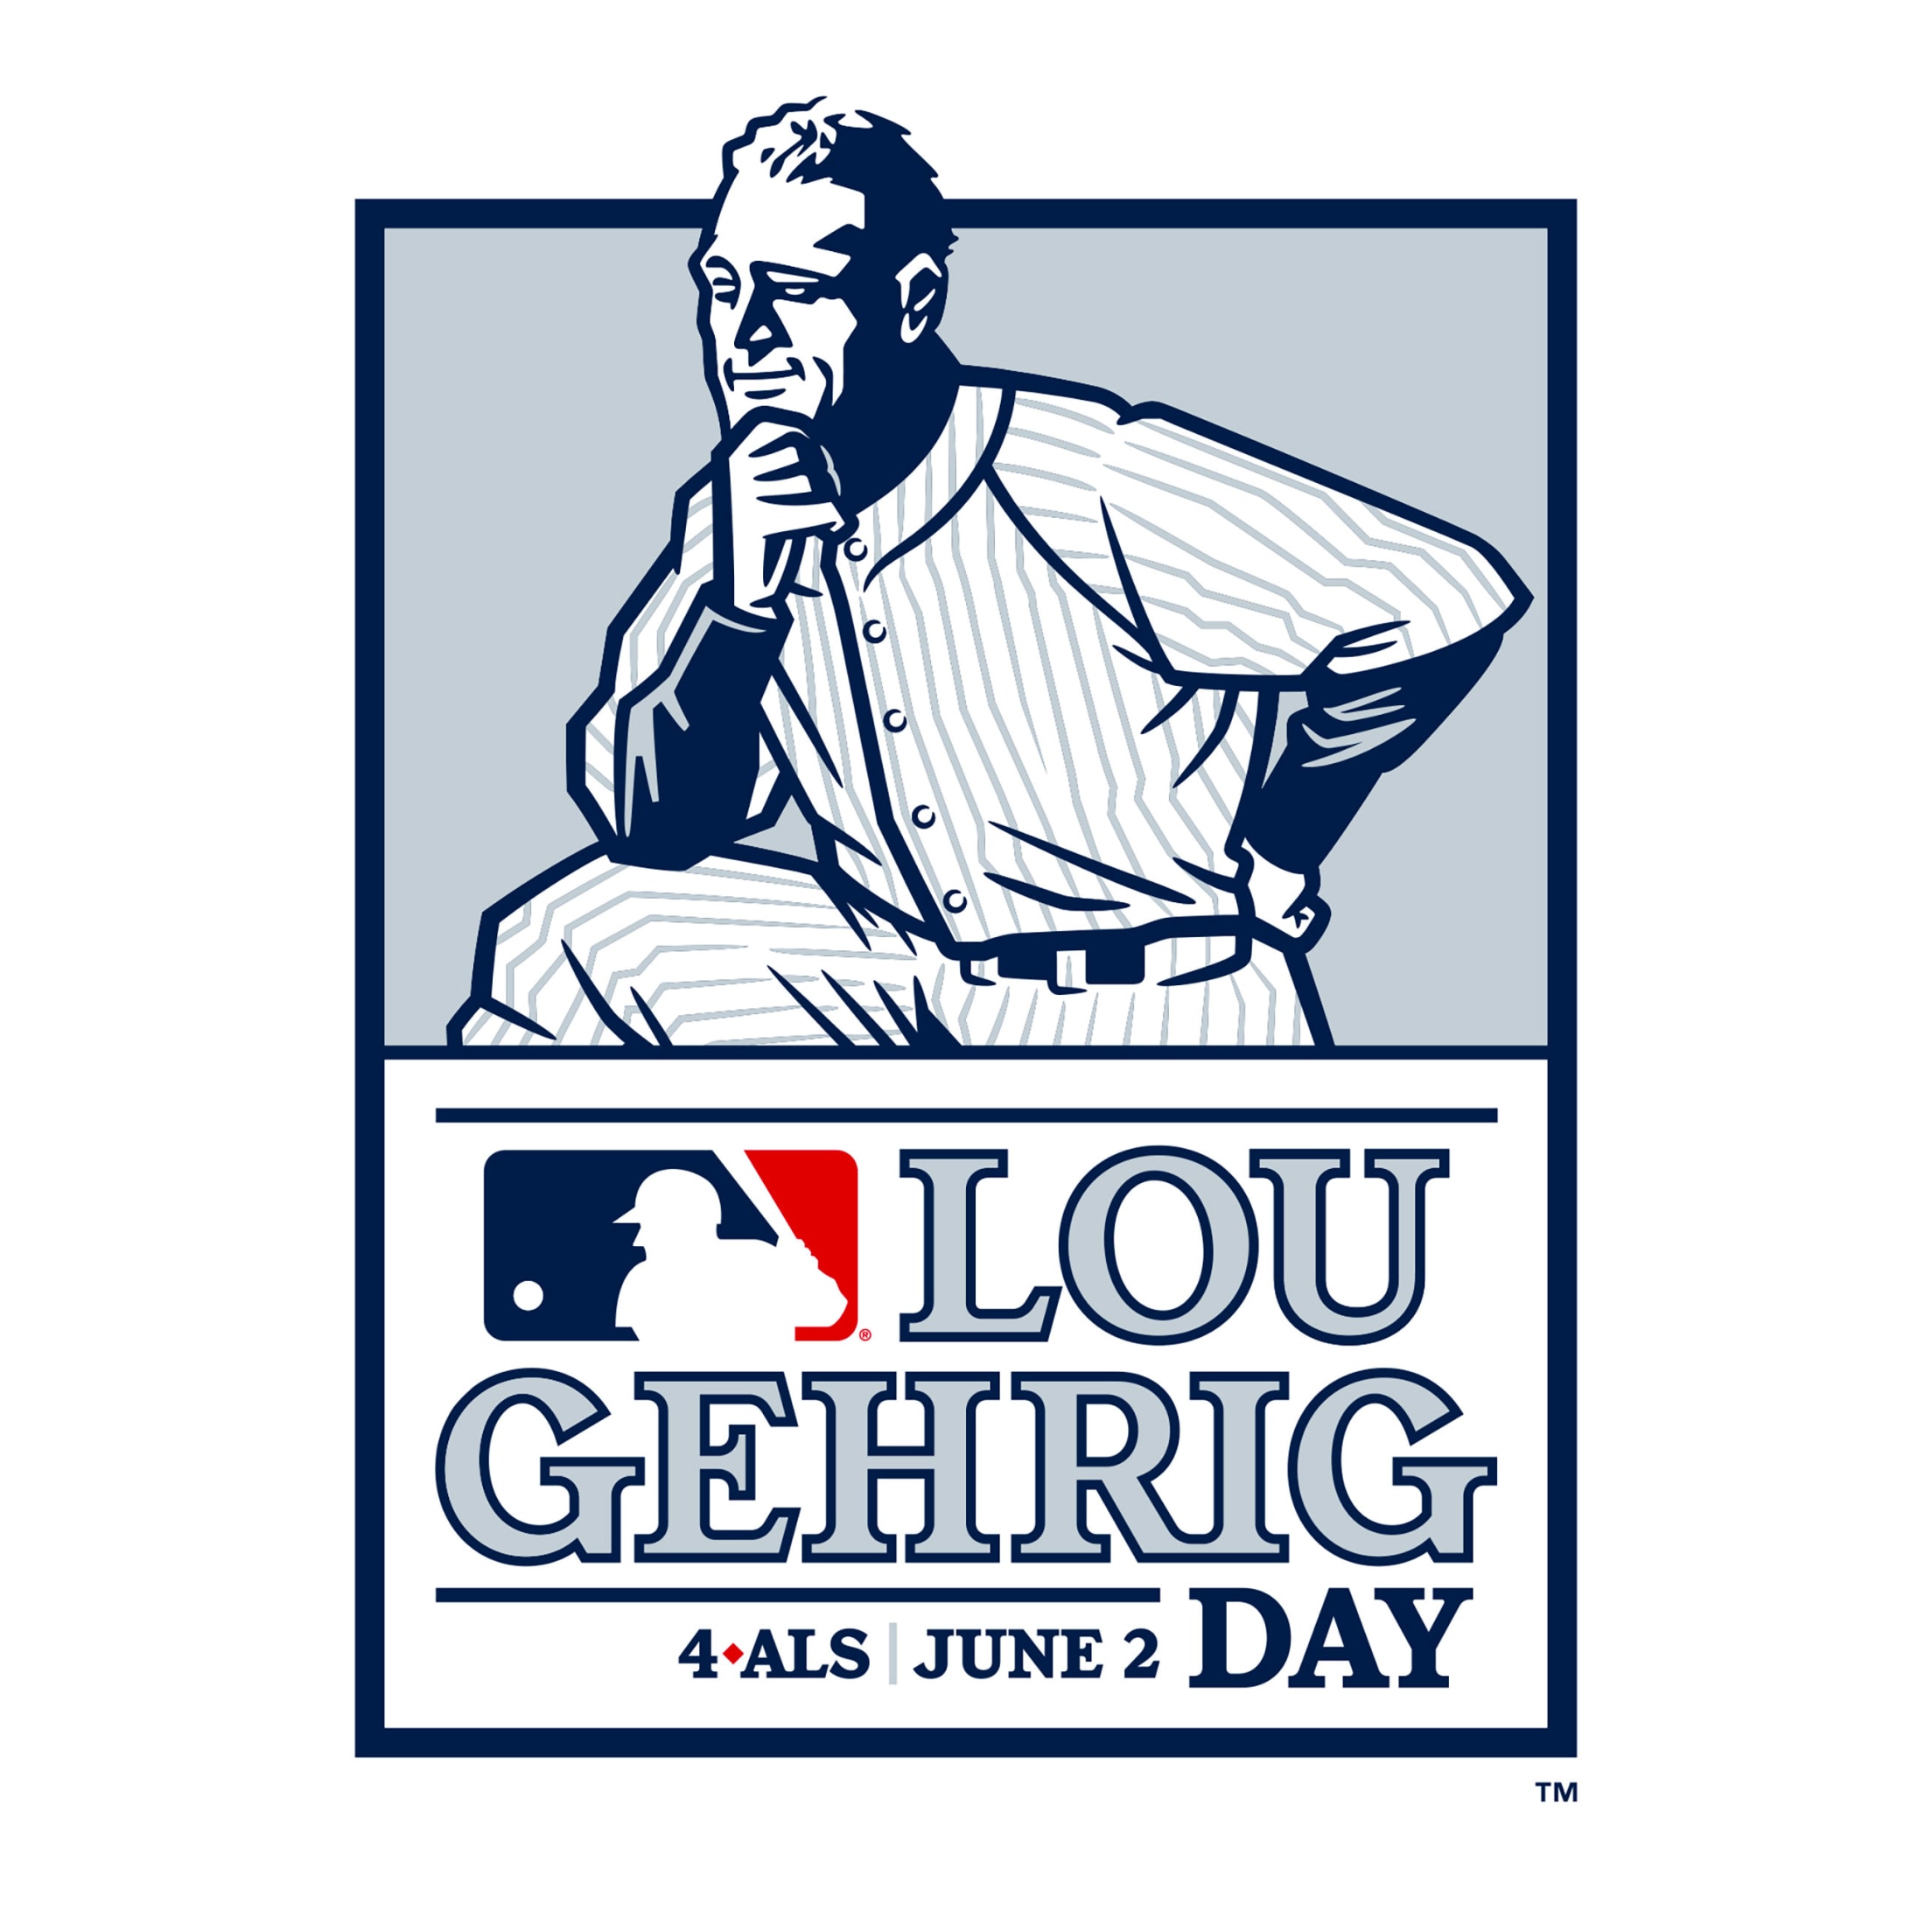 Lou Gehrig - Phi Delta Theta Fraternity